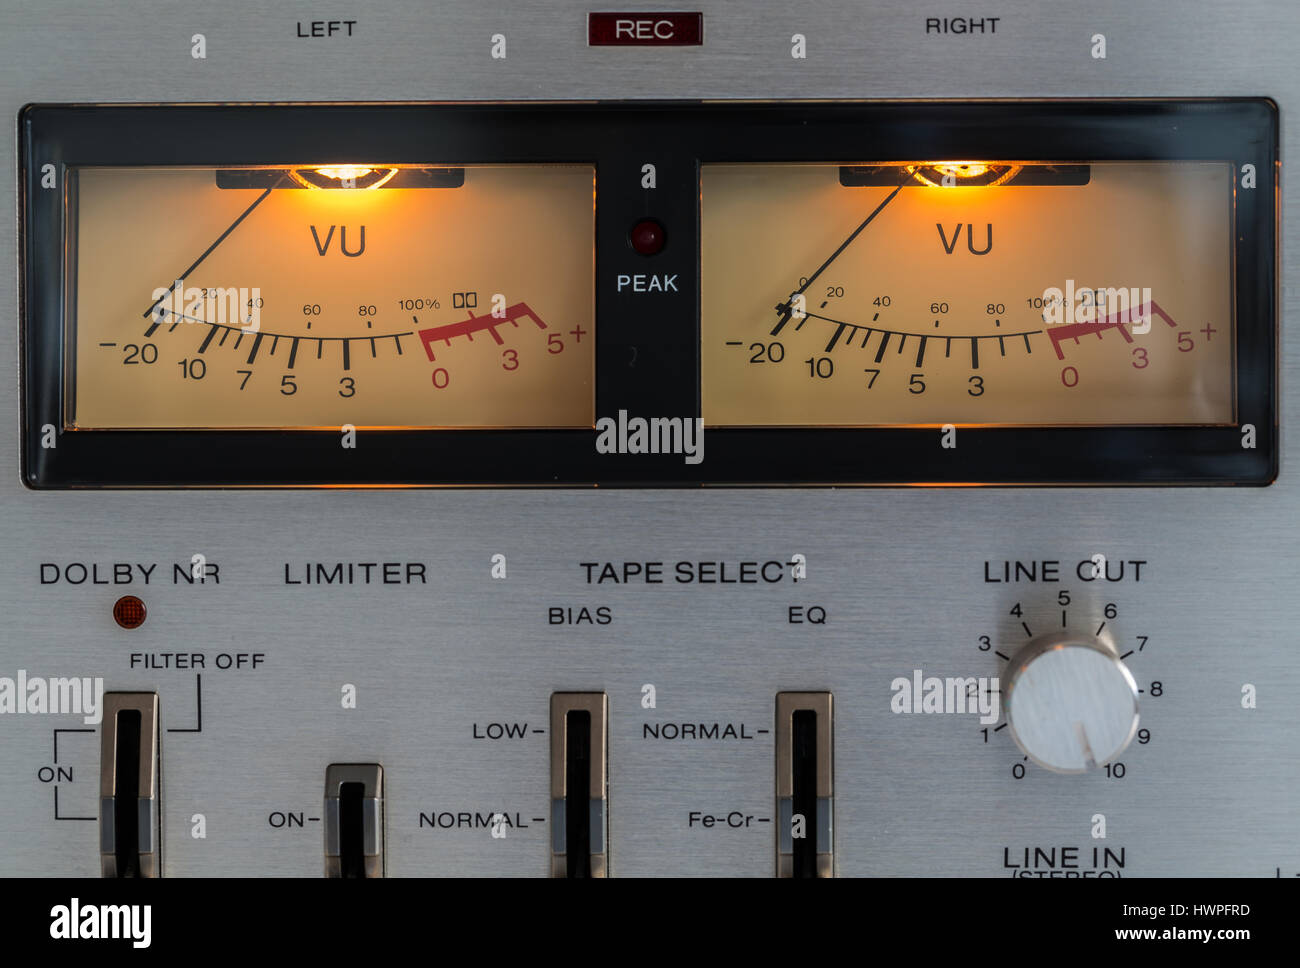 Vintage Analog VU Panel Meter L R Audio Meter Amp Sound dB New Old Stock 